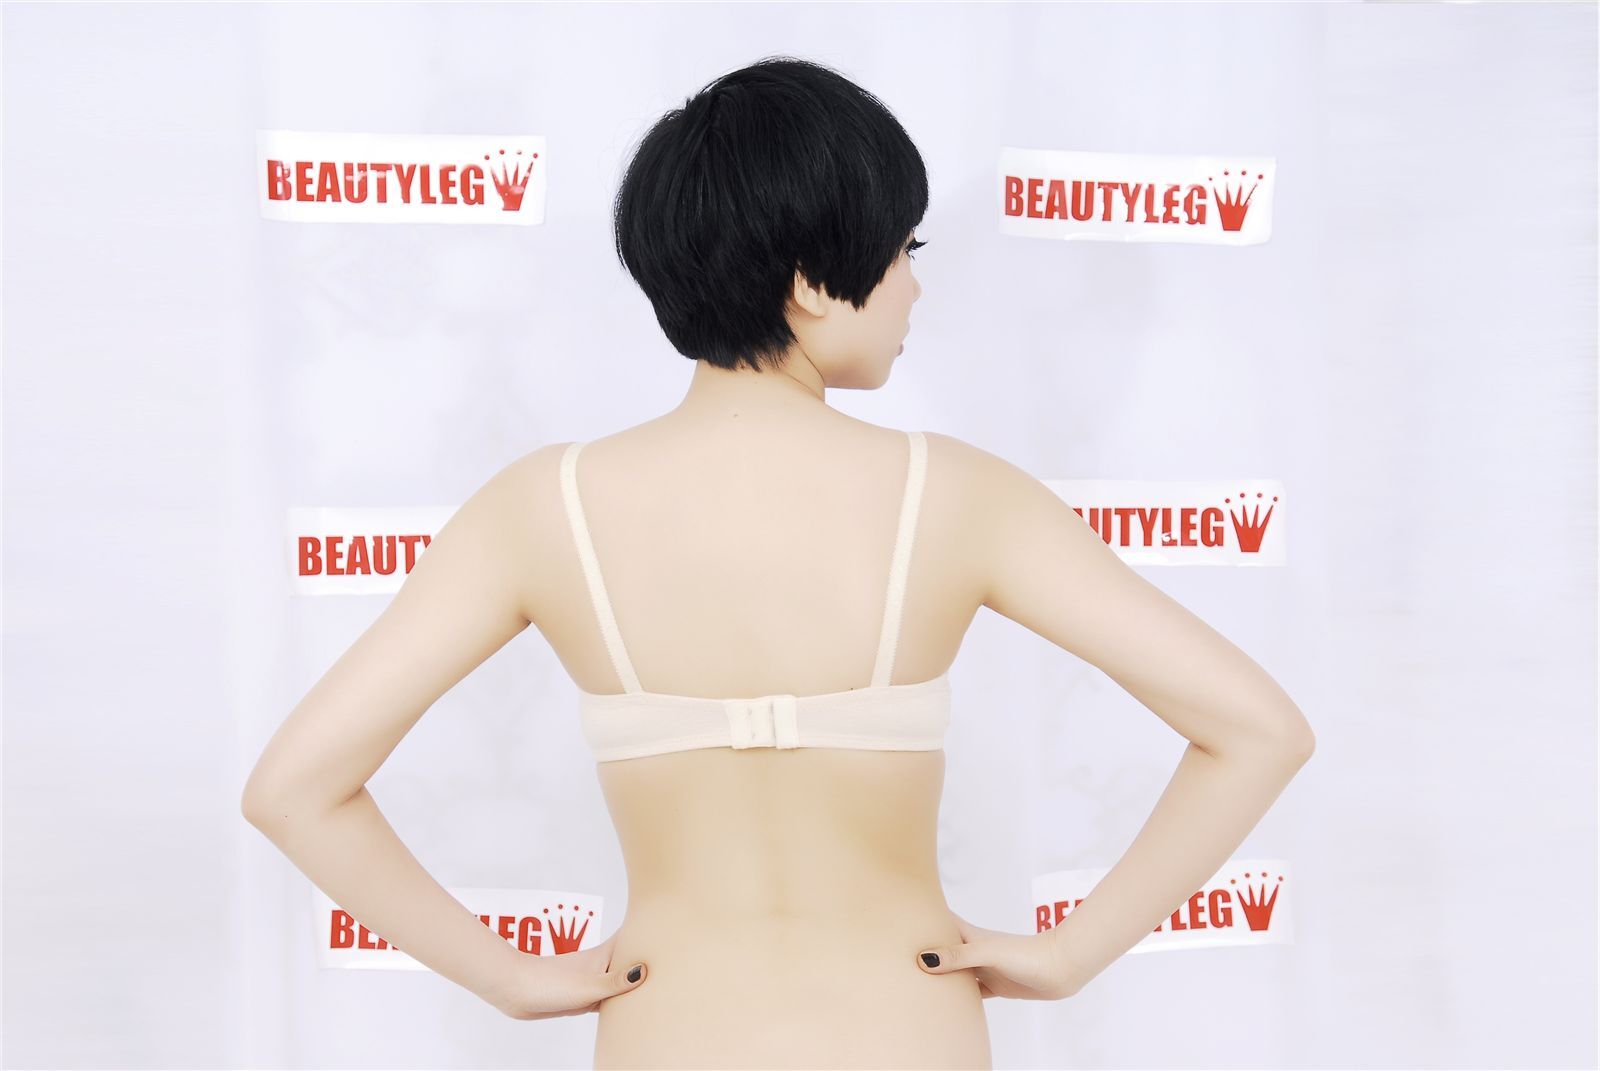 BeautyLeg underwear photo model set (2) high definition model underwear photos